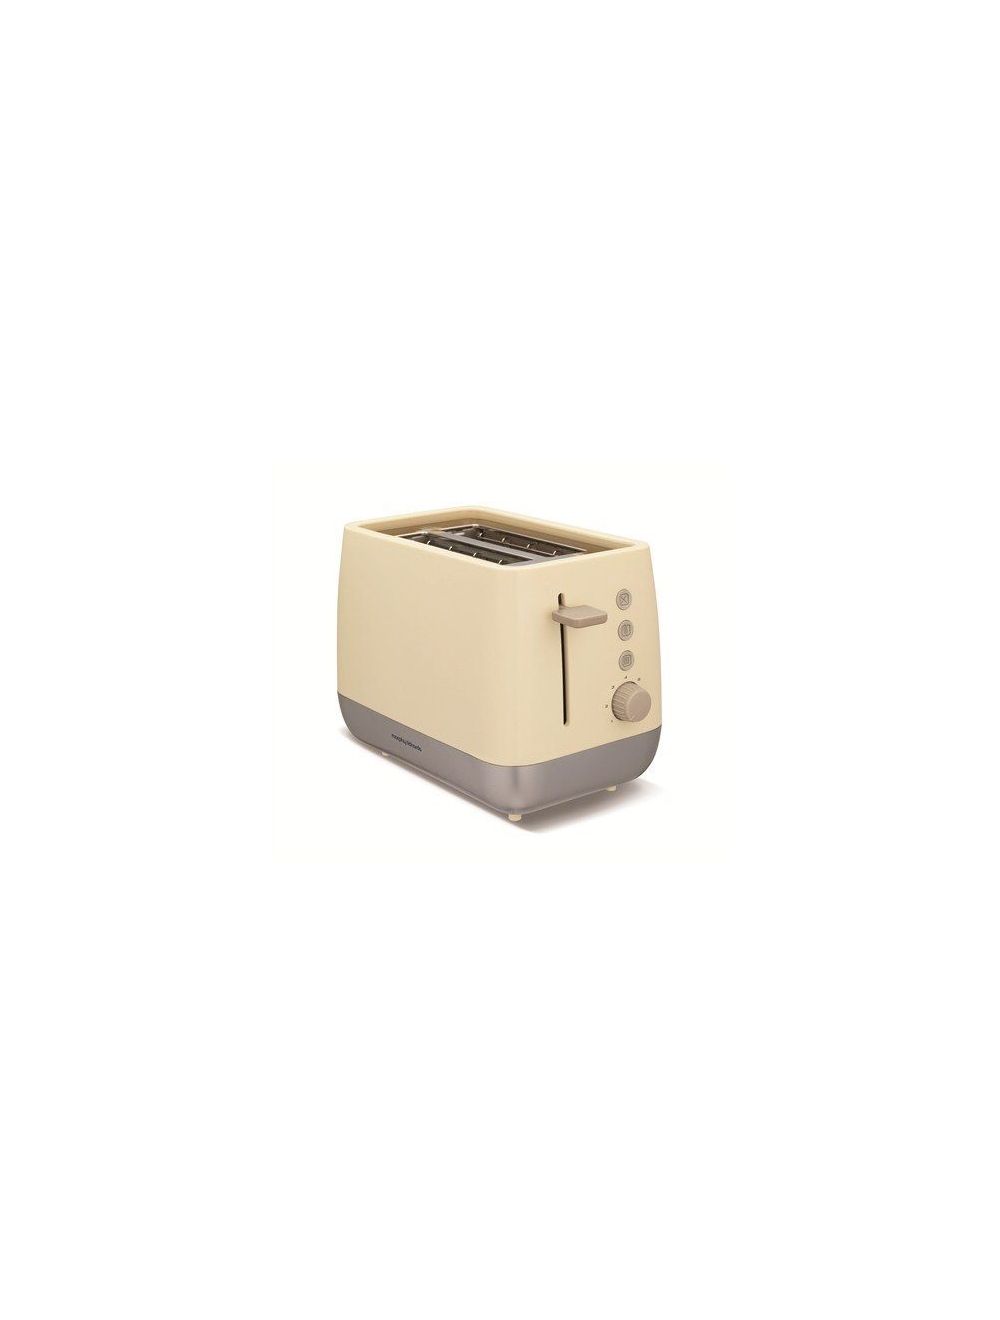 Morphy Richards Chroma Plastic Toaster 2 Slice - Cream-221107